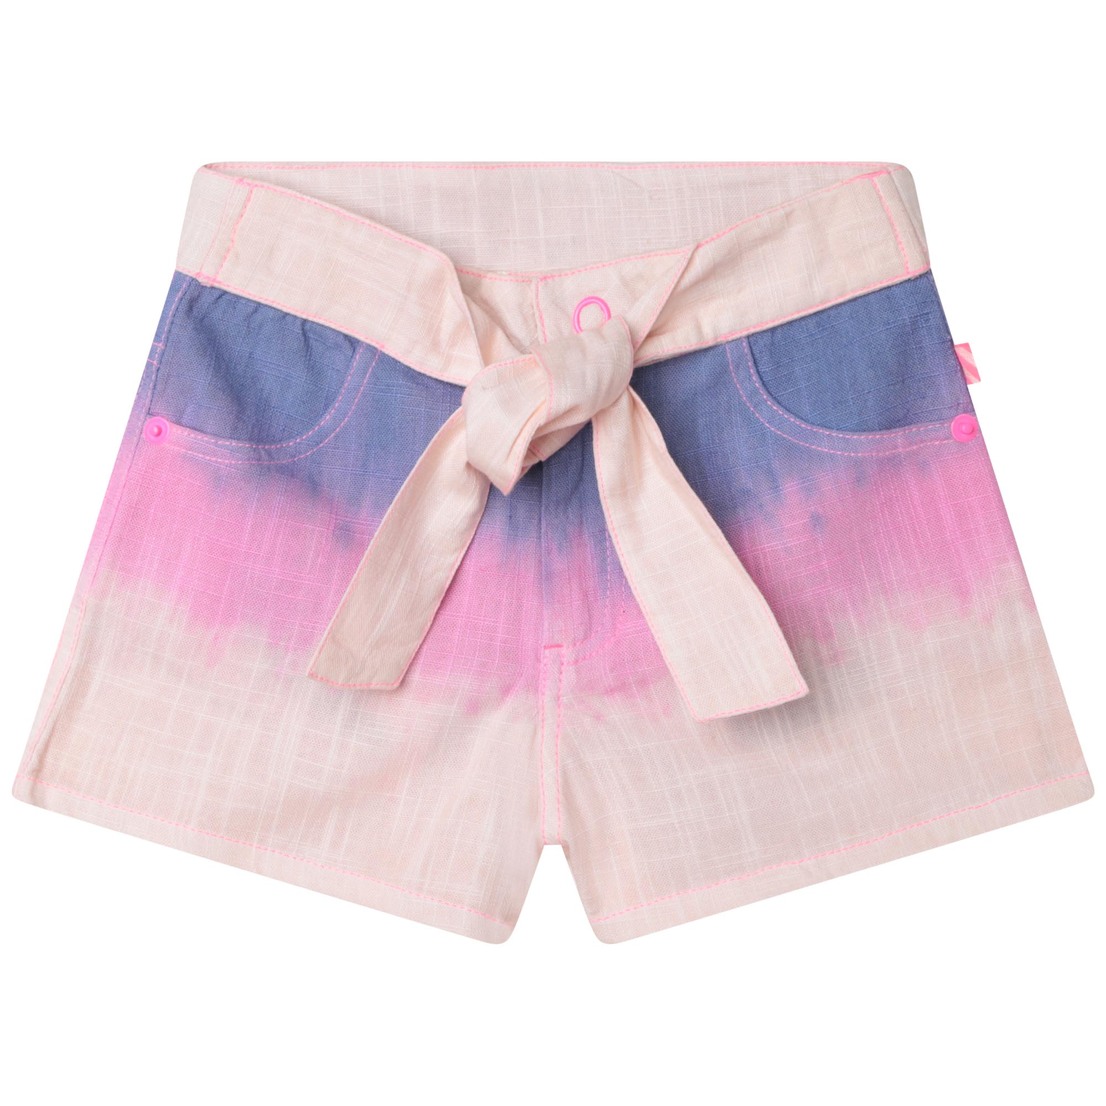 Tie & dye cotton shorts, 3 pockets, adjustable wai